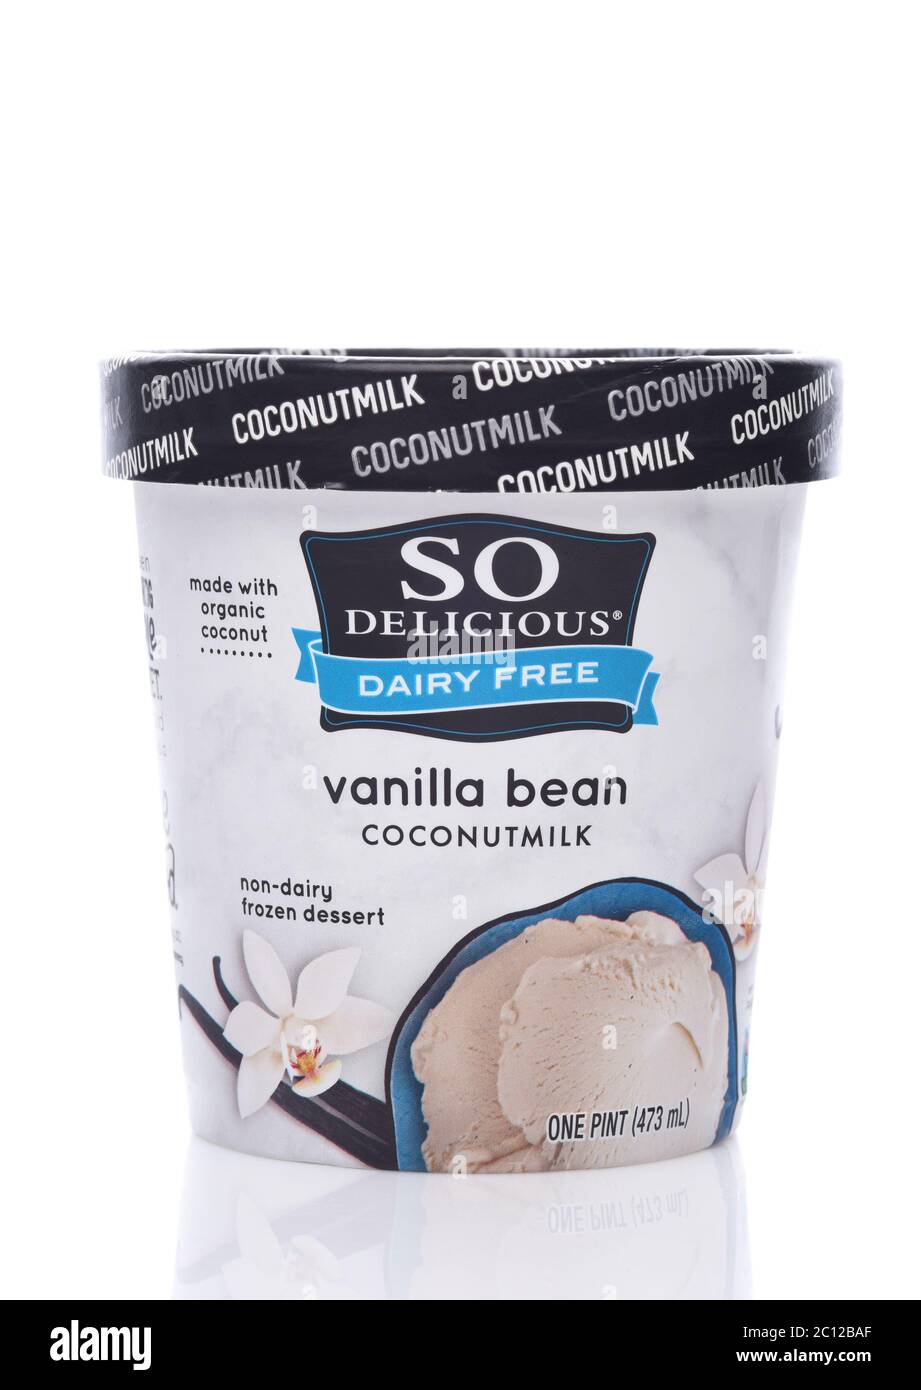 IRVINE, CALIFORNIA - 26 APRIL 2020:  A Carton of So Delicious Vanilla Bean Coconut Milk Non-Dairy Frozen Dessert. Stock Photo